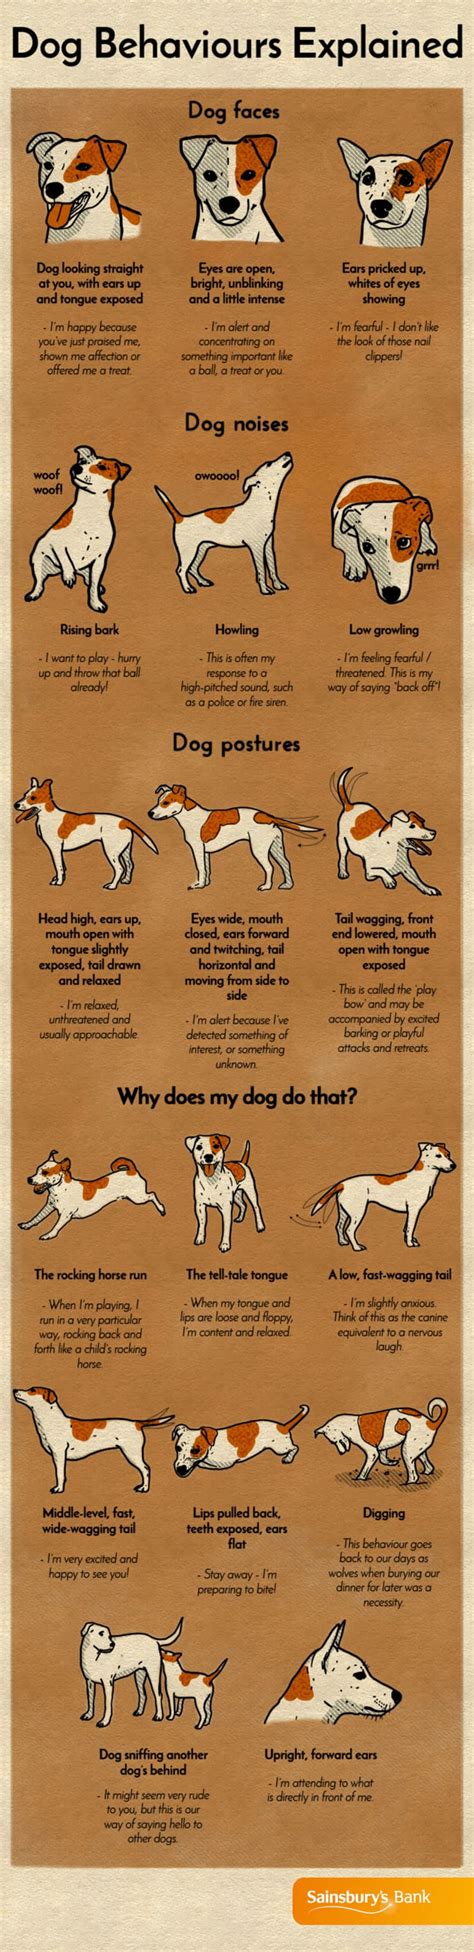 Dog Behaviors Explained